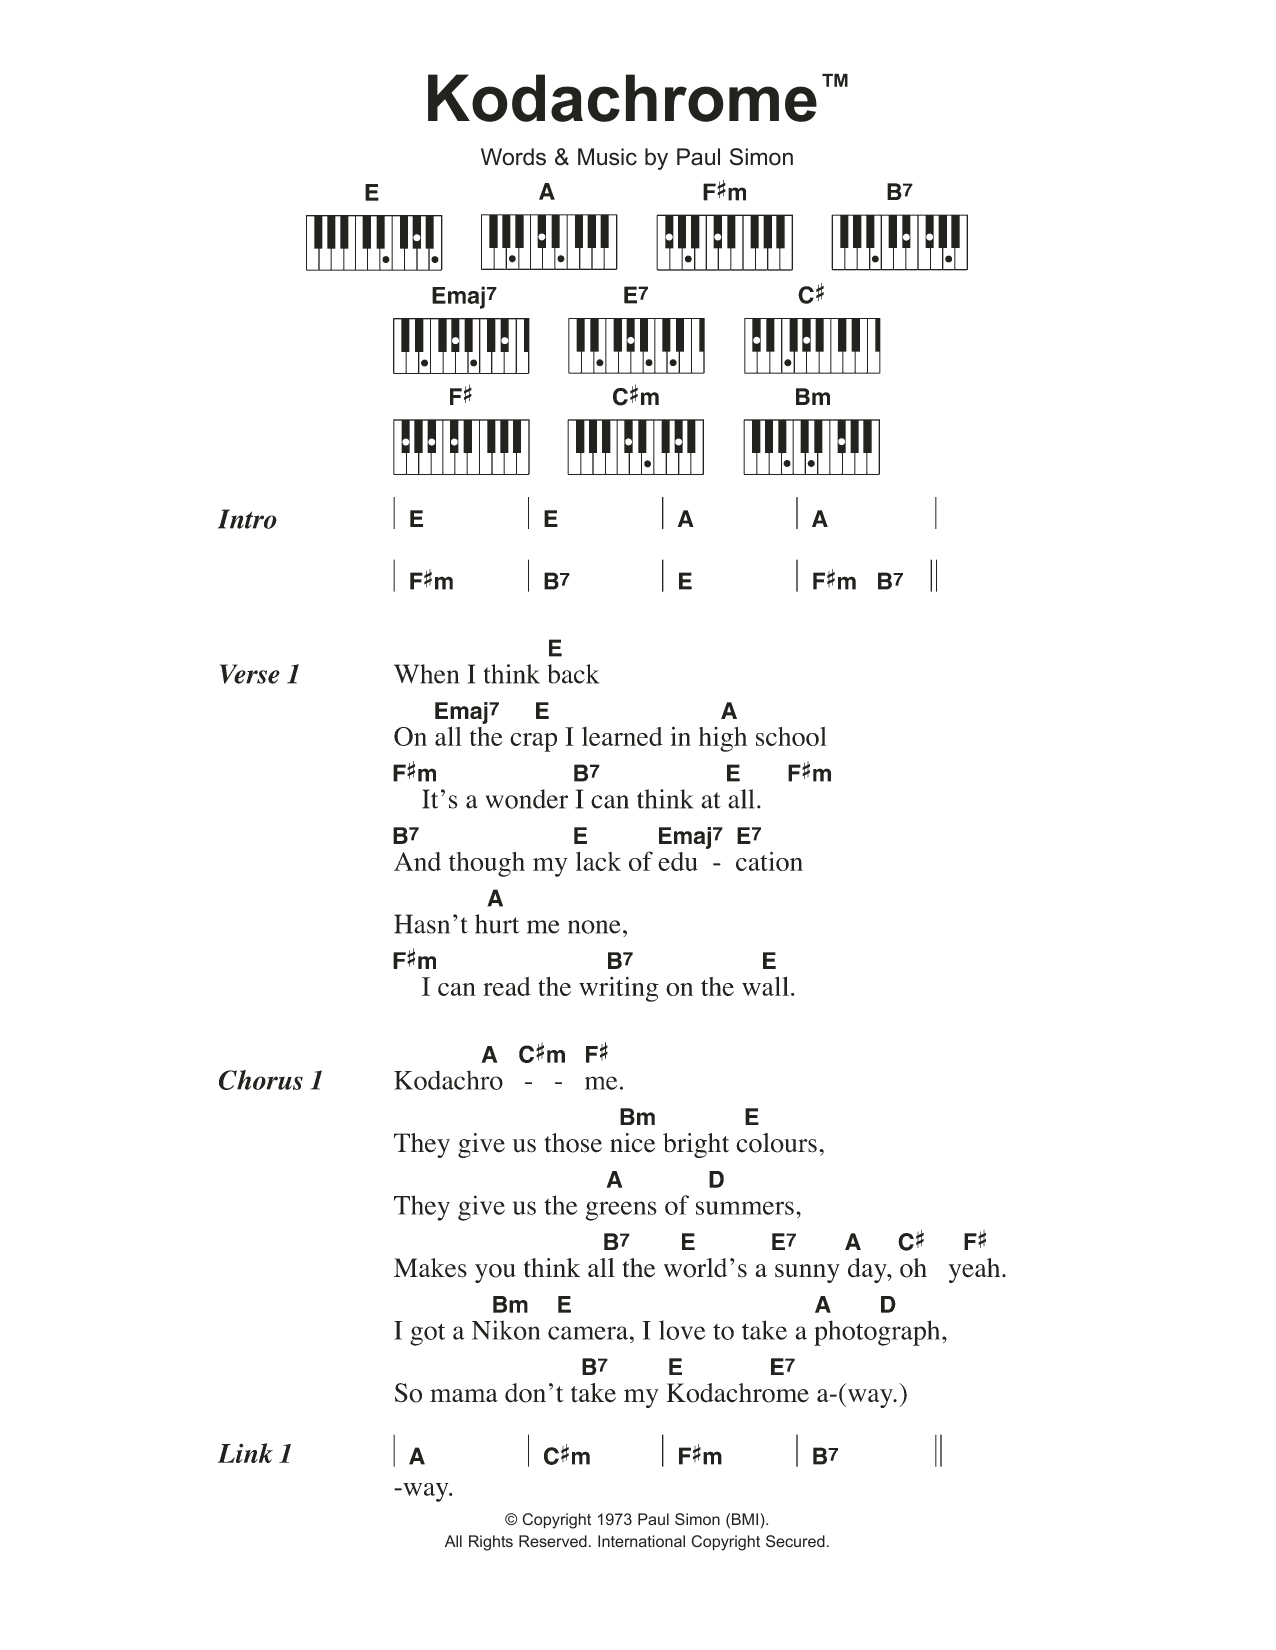 Paul Simon KodachromeTM Sheet Music Notes & Chords for Lyrics & Piano Chords - Download or Print PDF